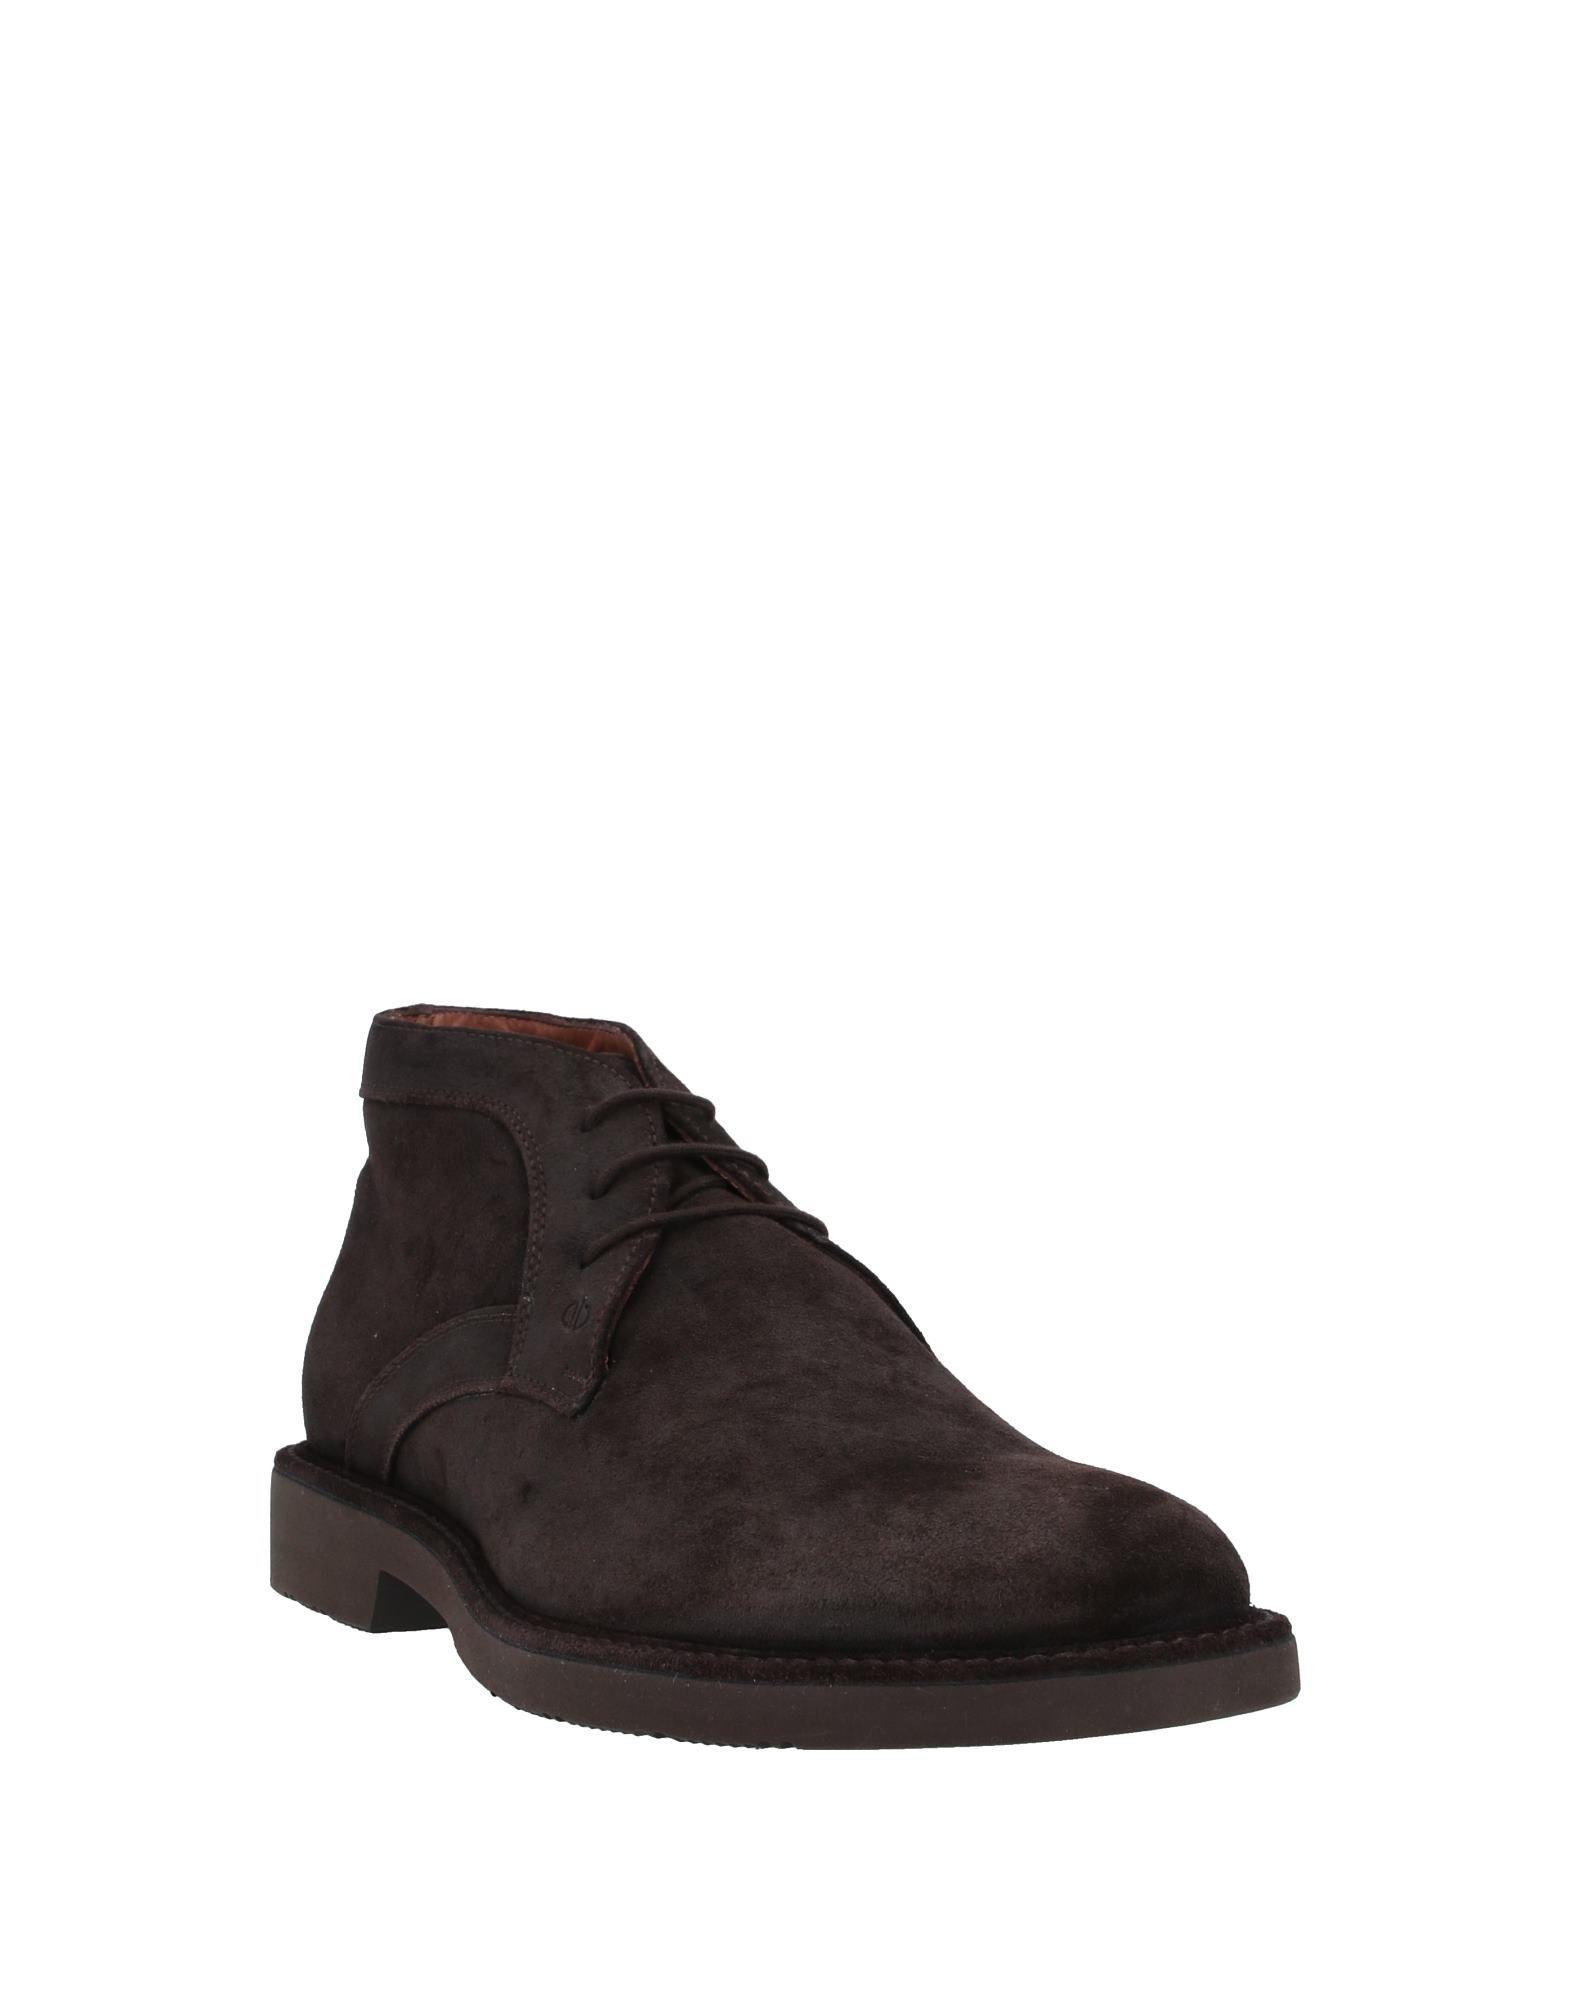 Aldo Brue' Suede Ankle Boots in Dark Brown (Brown) for Men - Lyst